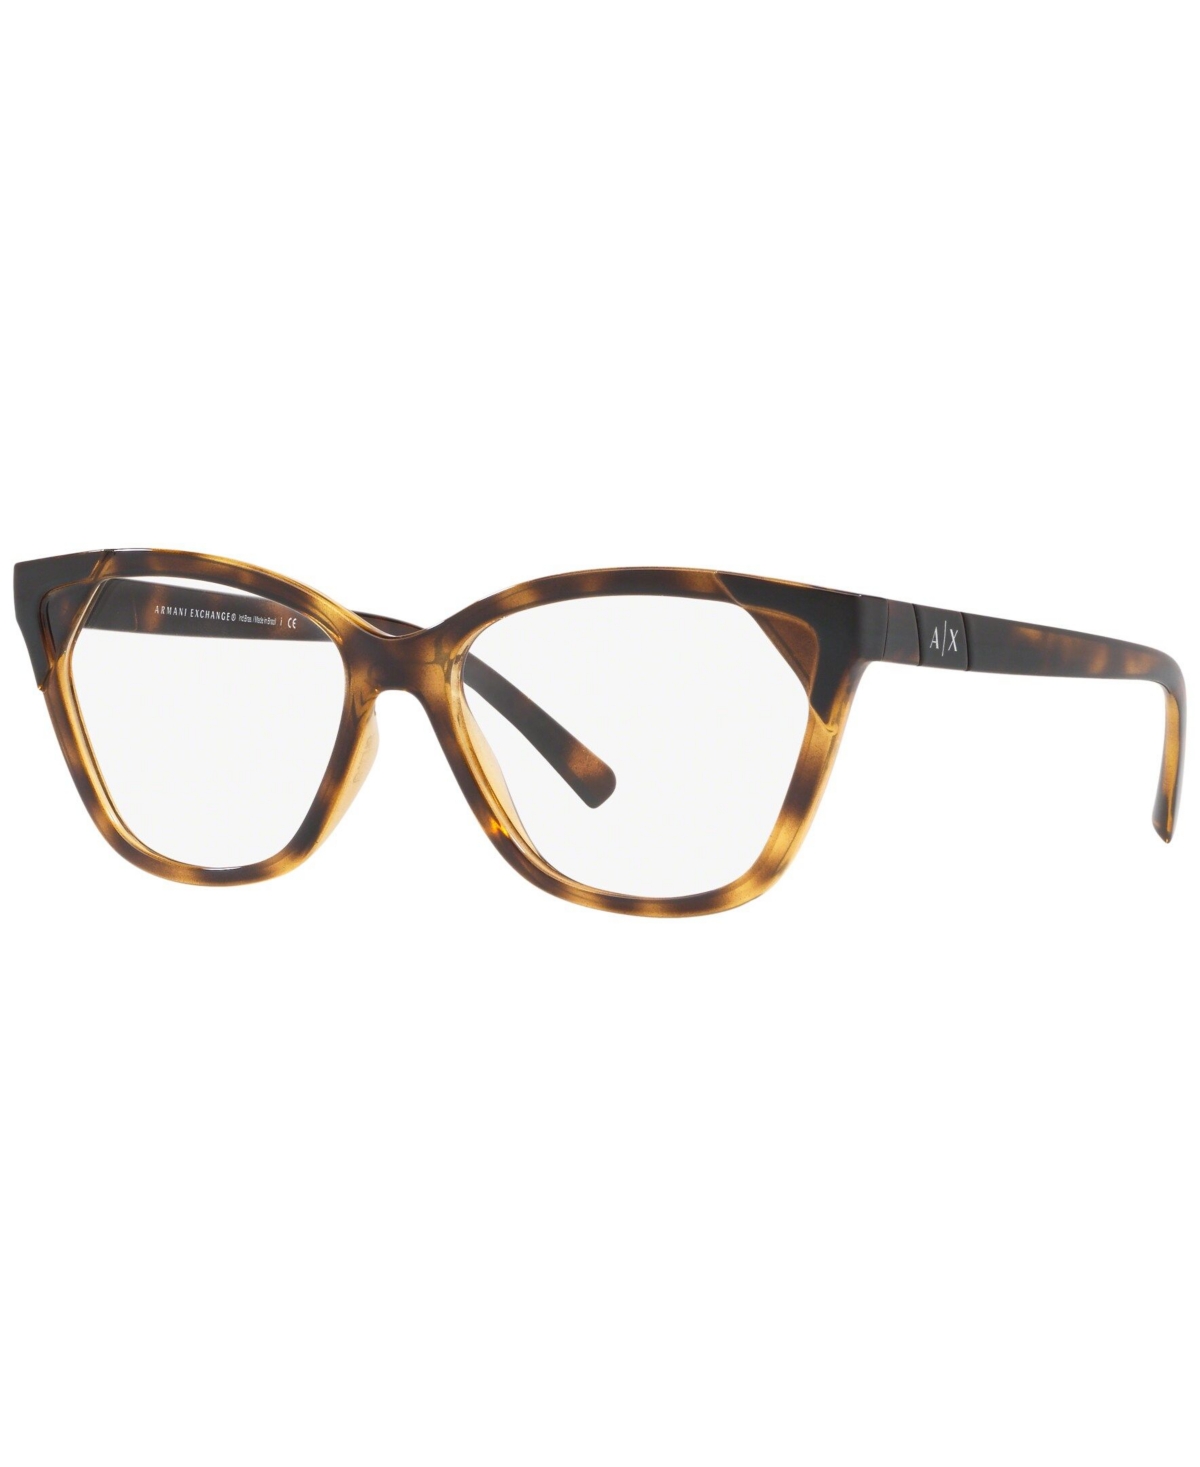 EAN 7895653176164 product image for Armani Exchange AX3059 Women's Irregular Eyeglasses | upcitemdb.com